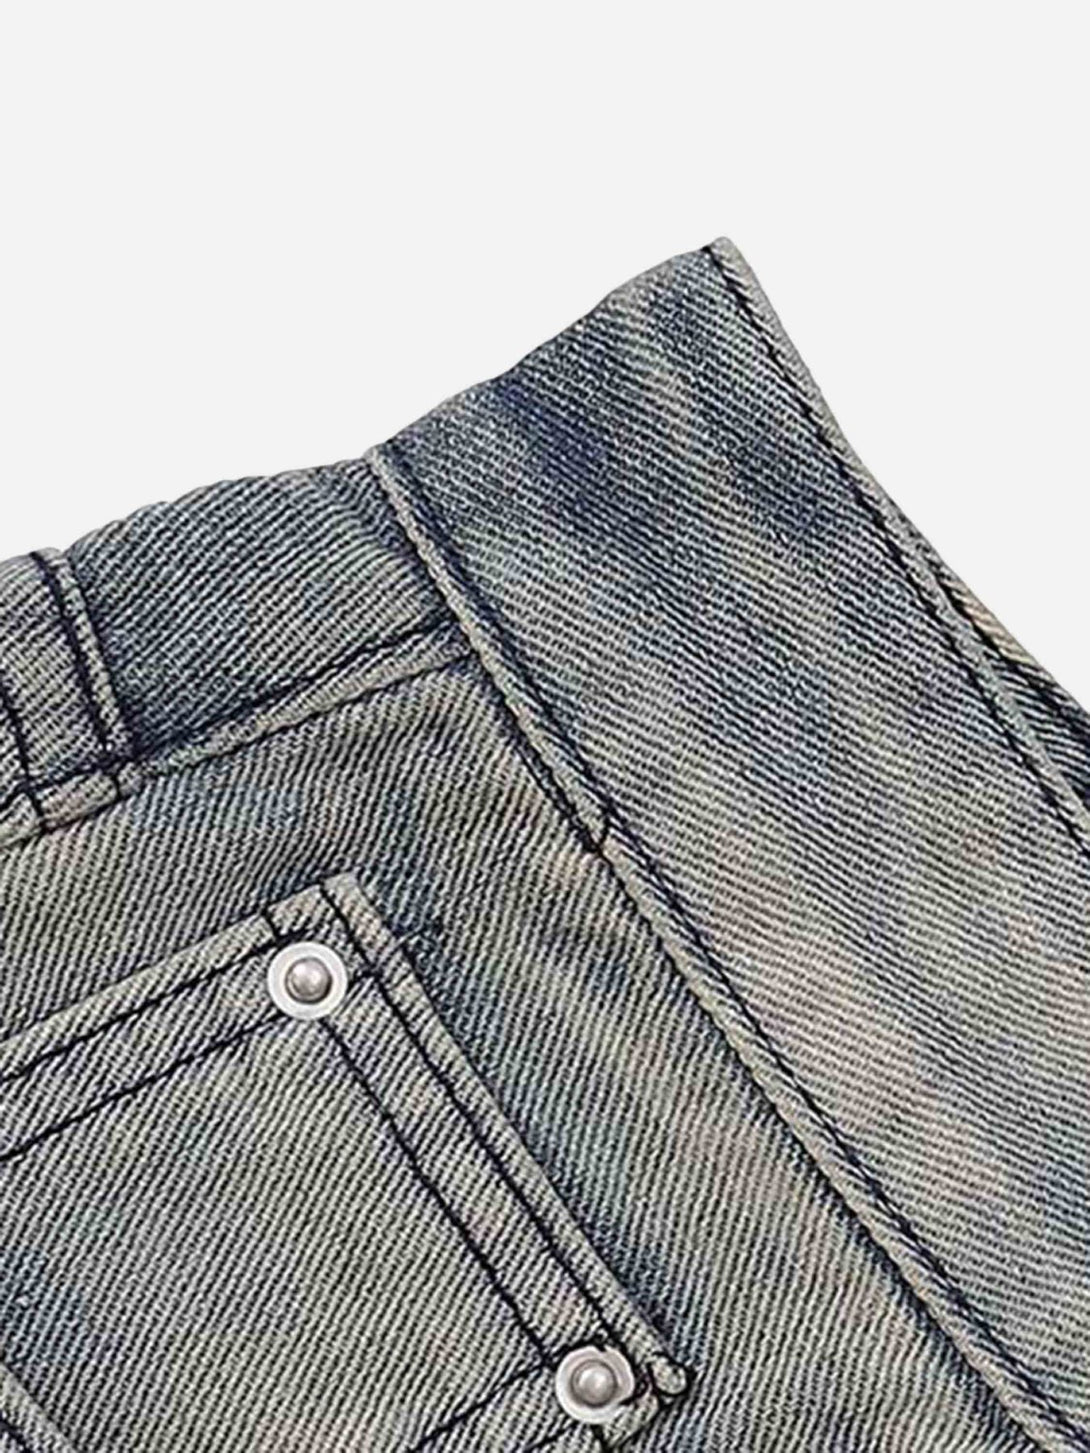 Majesda® - Vintage Ink Splash Washed And Distressed Jeans- Outfit Ideas - Streetwear Fashion - majesda.com